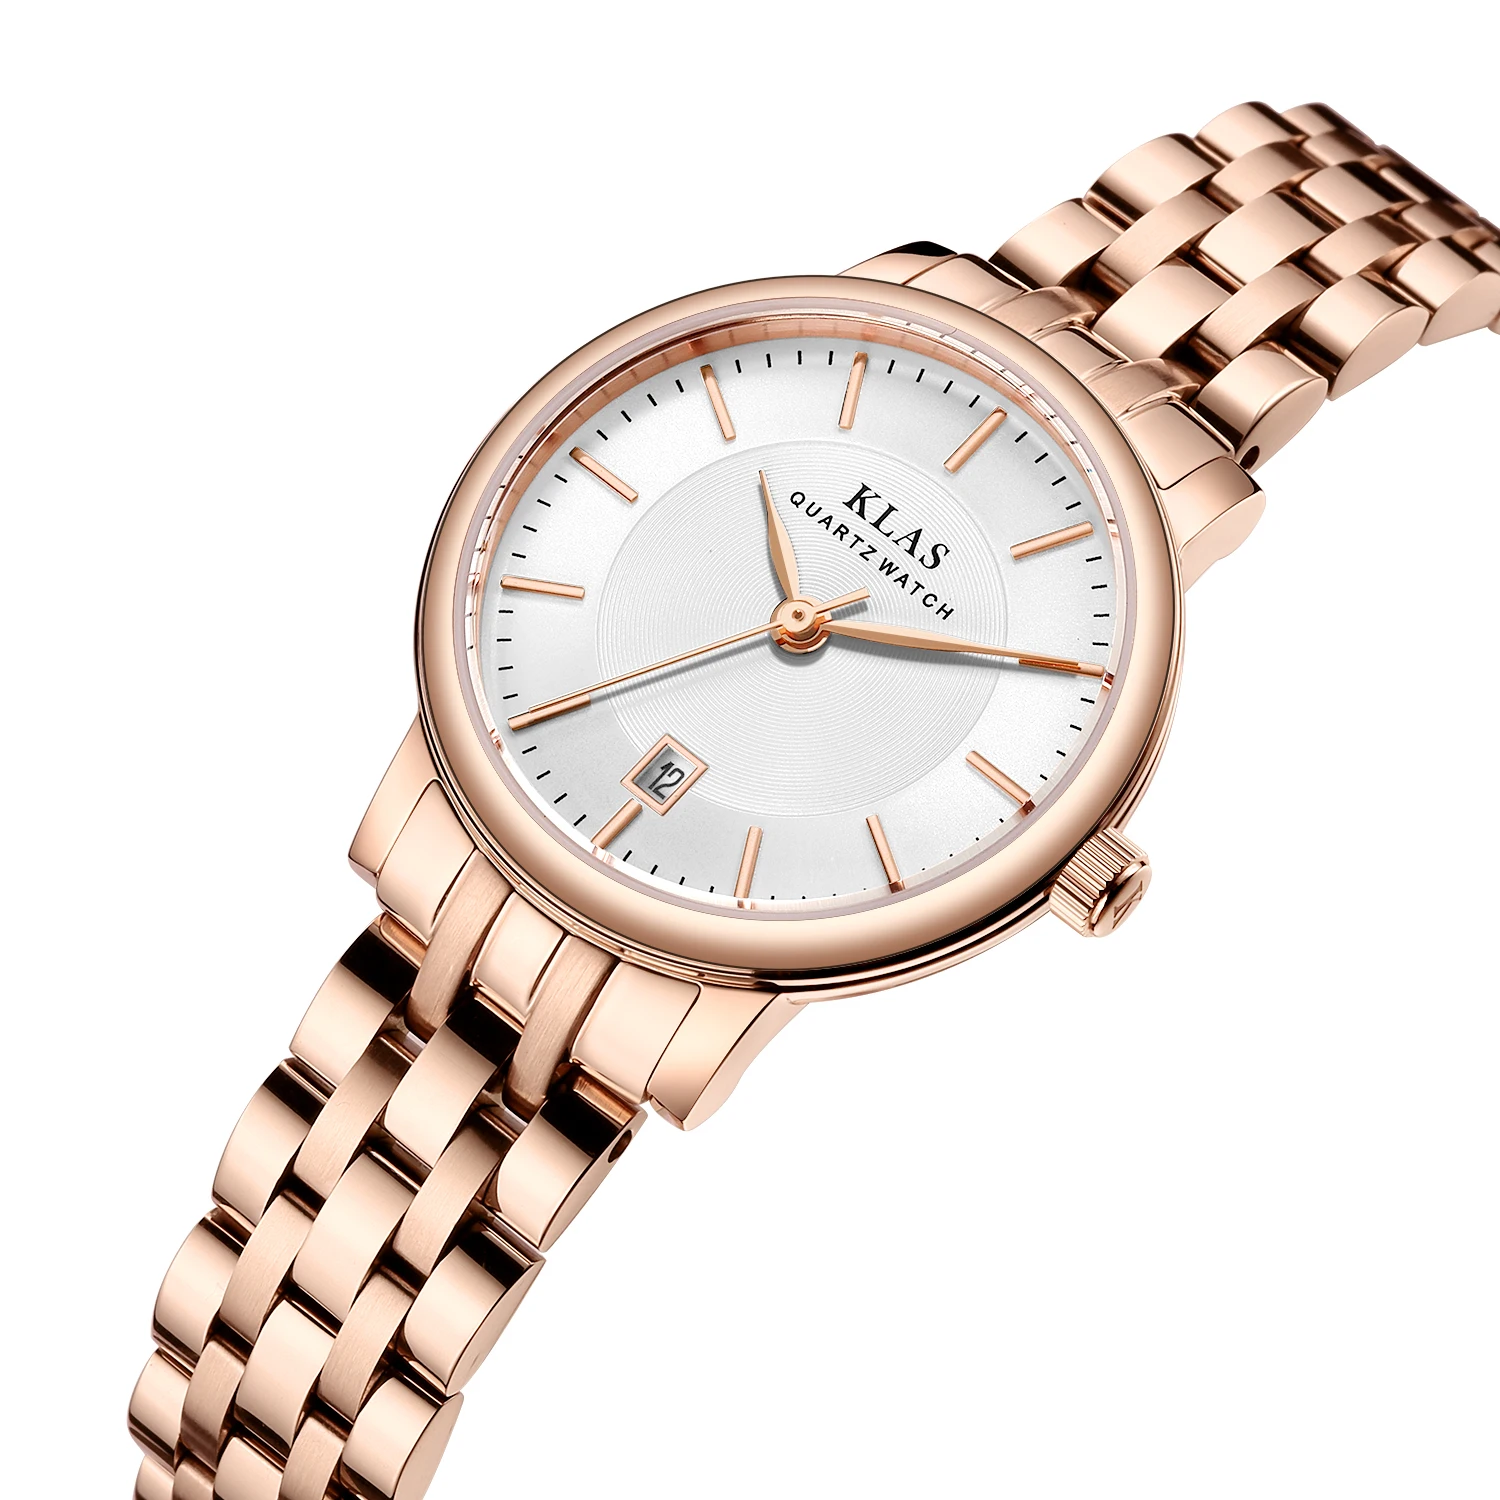 Stainless Steel Romantic Women's Watch Fashion Simple Watch Watch KLAS brand watch for girls